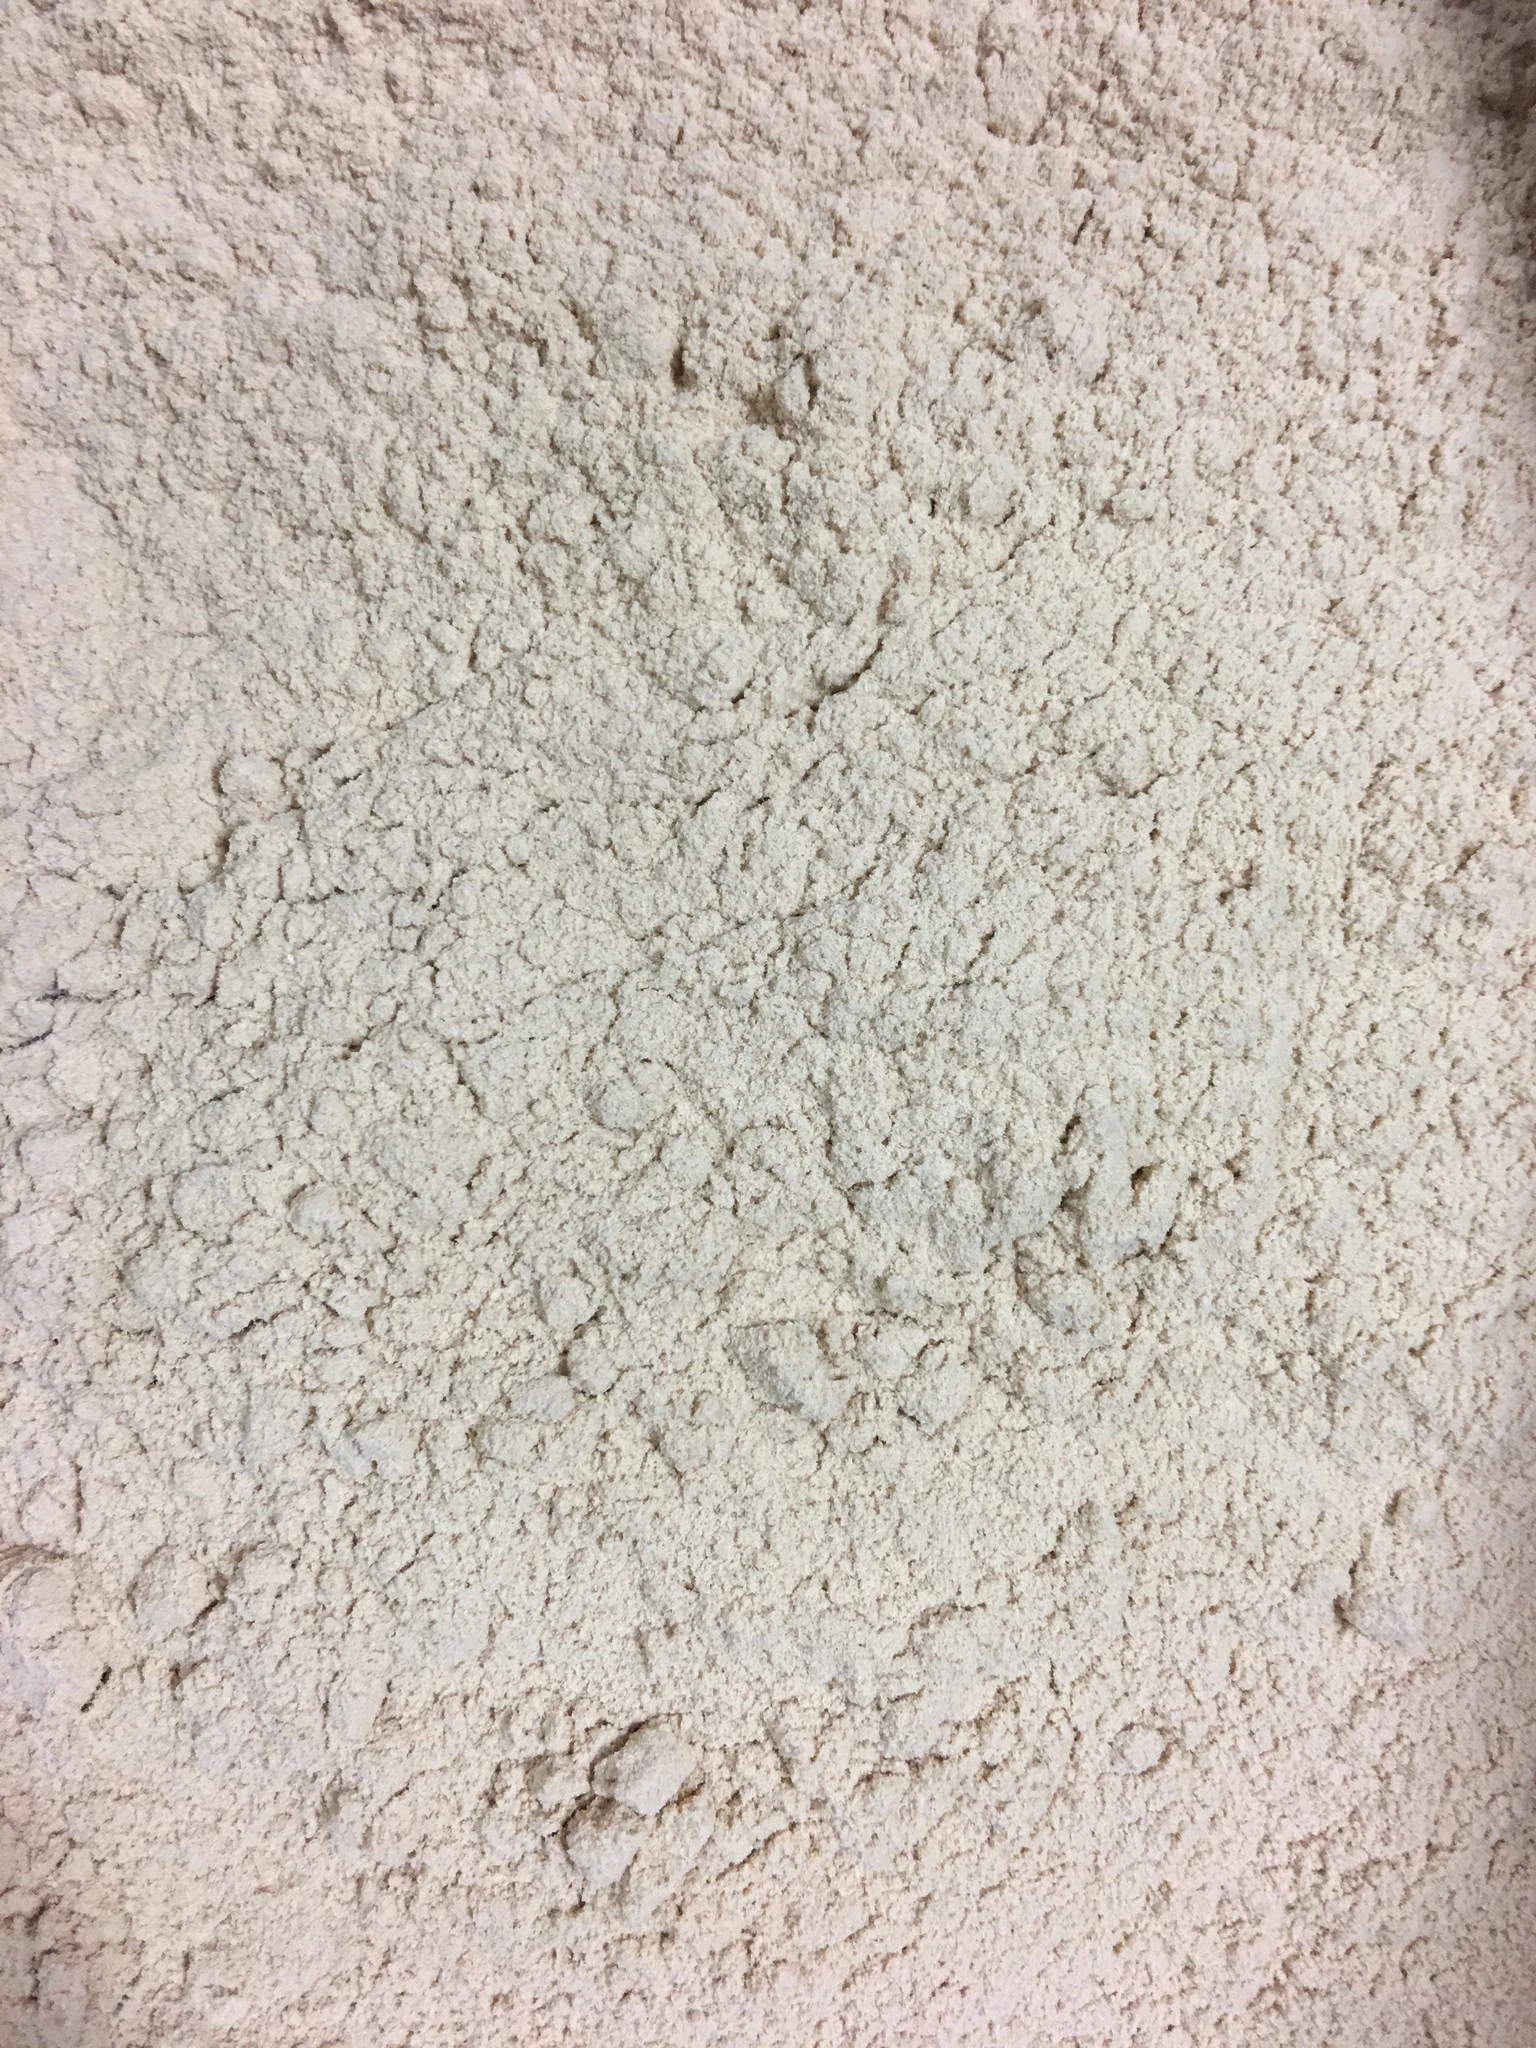 Wood Flour